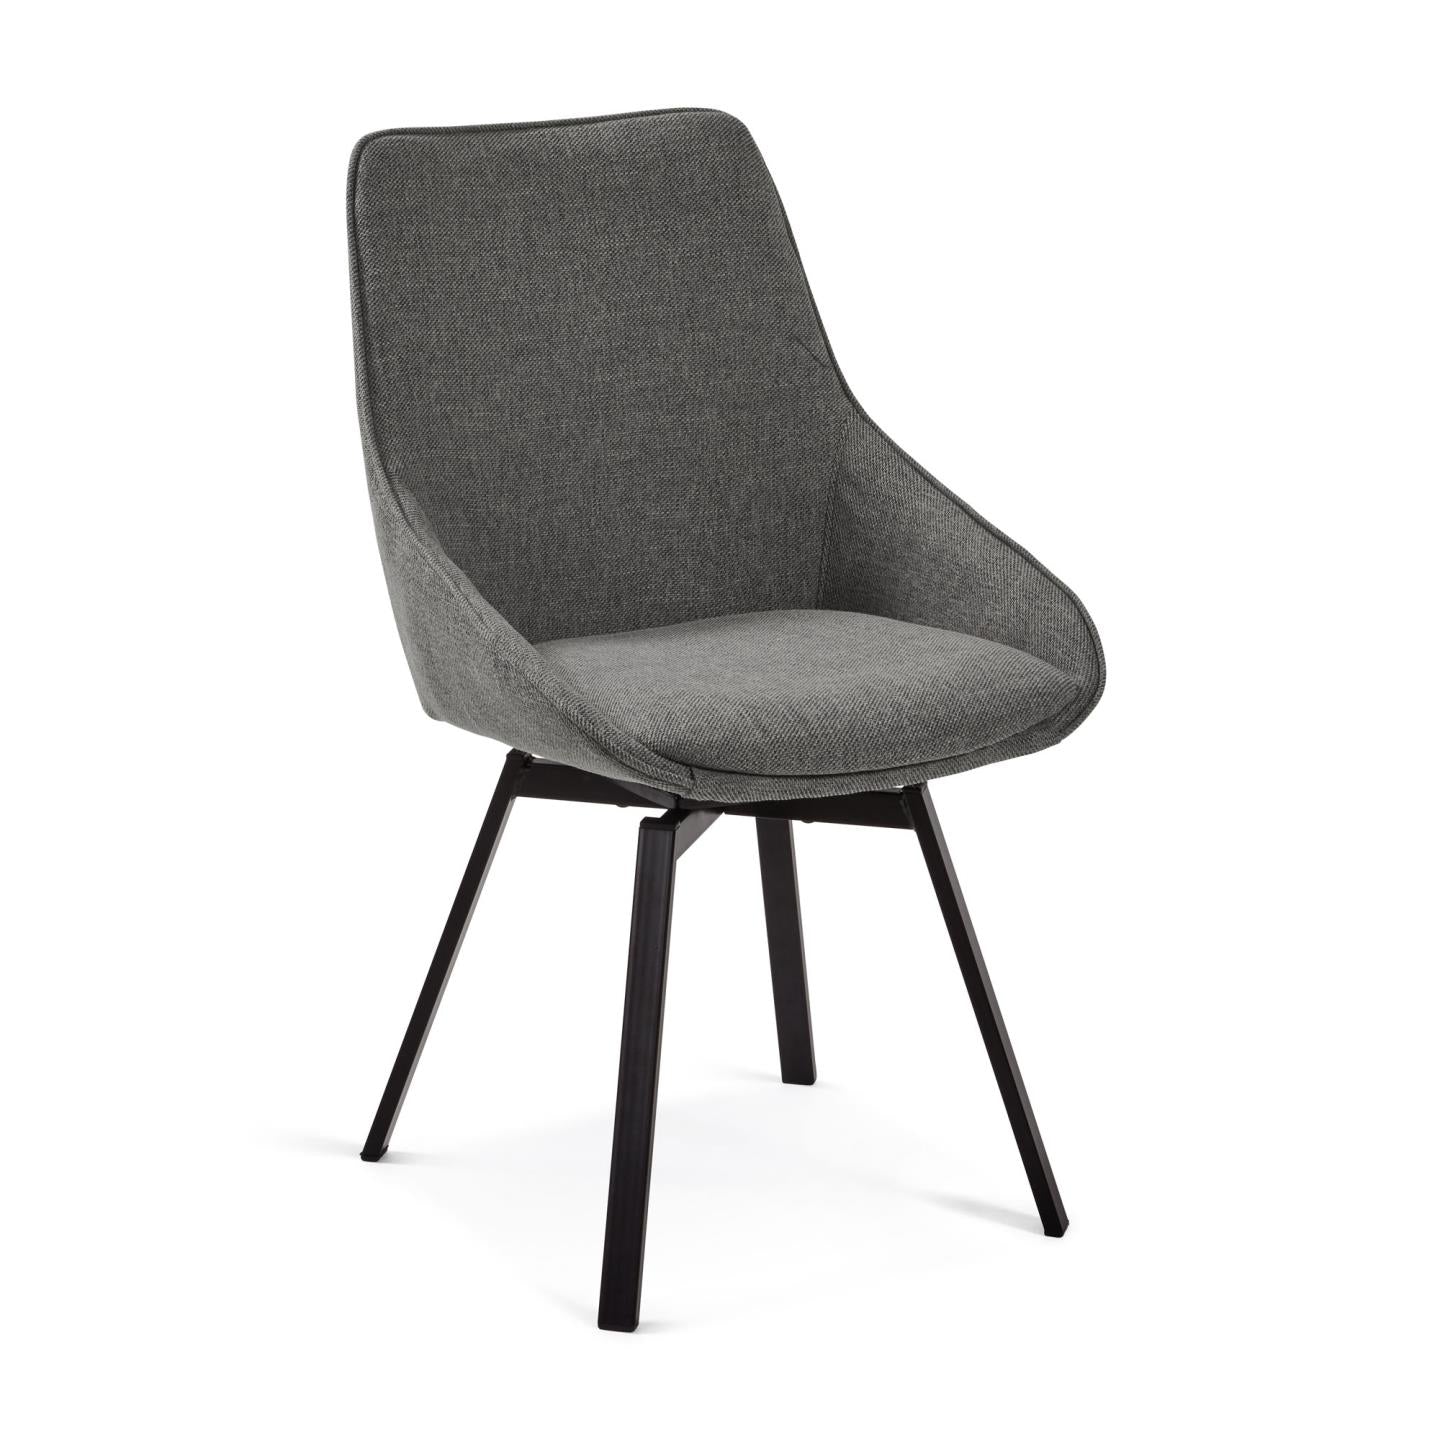 Jenna dark grey swivel chair with steel legs with black finish